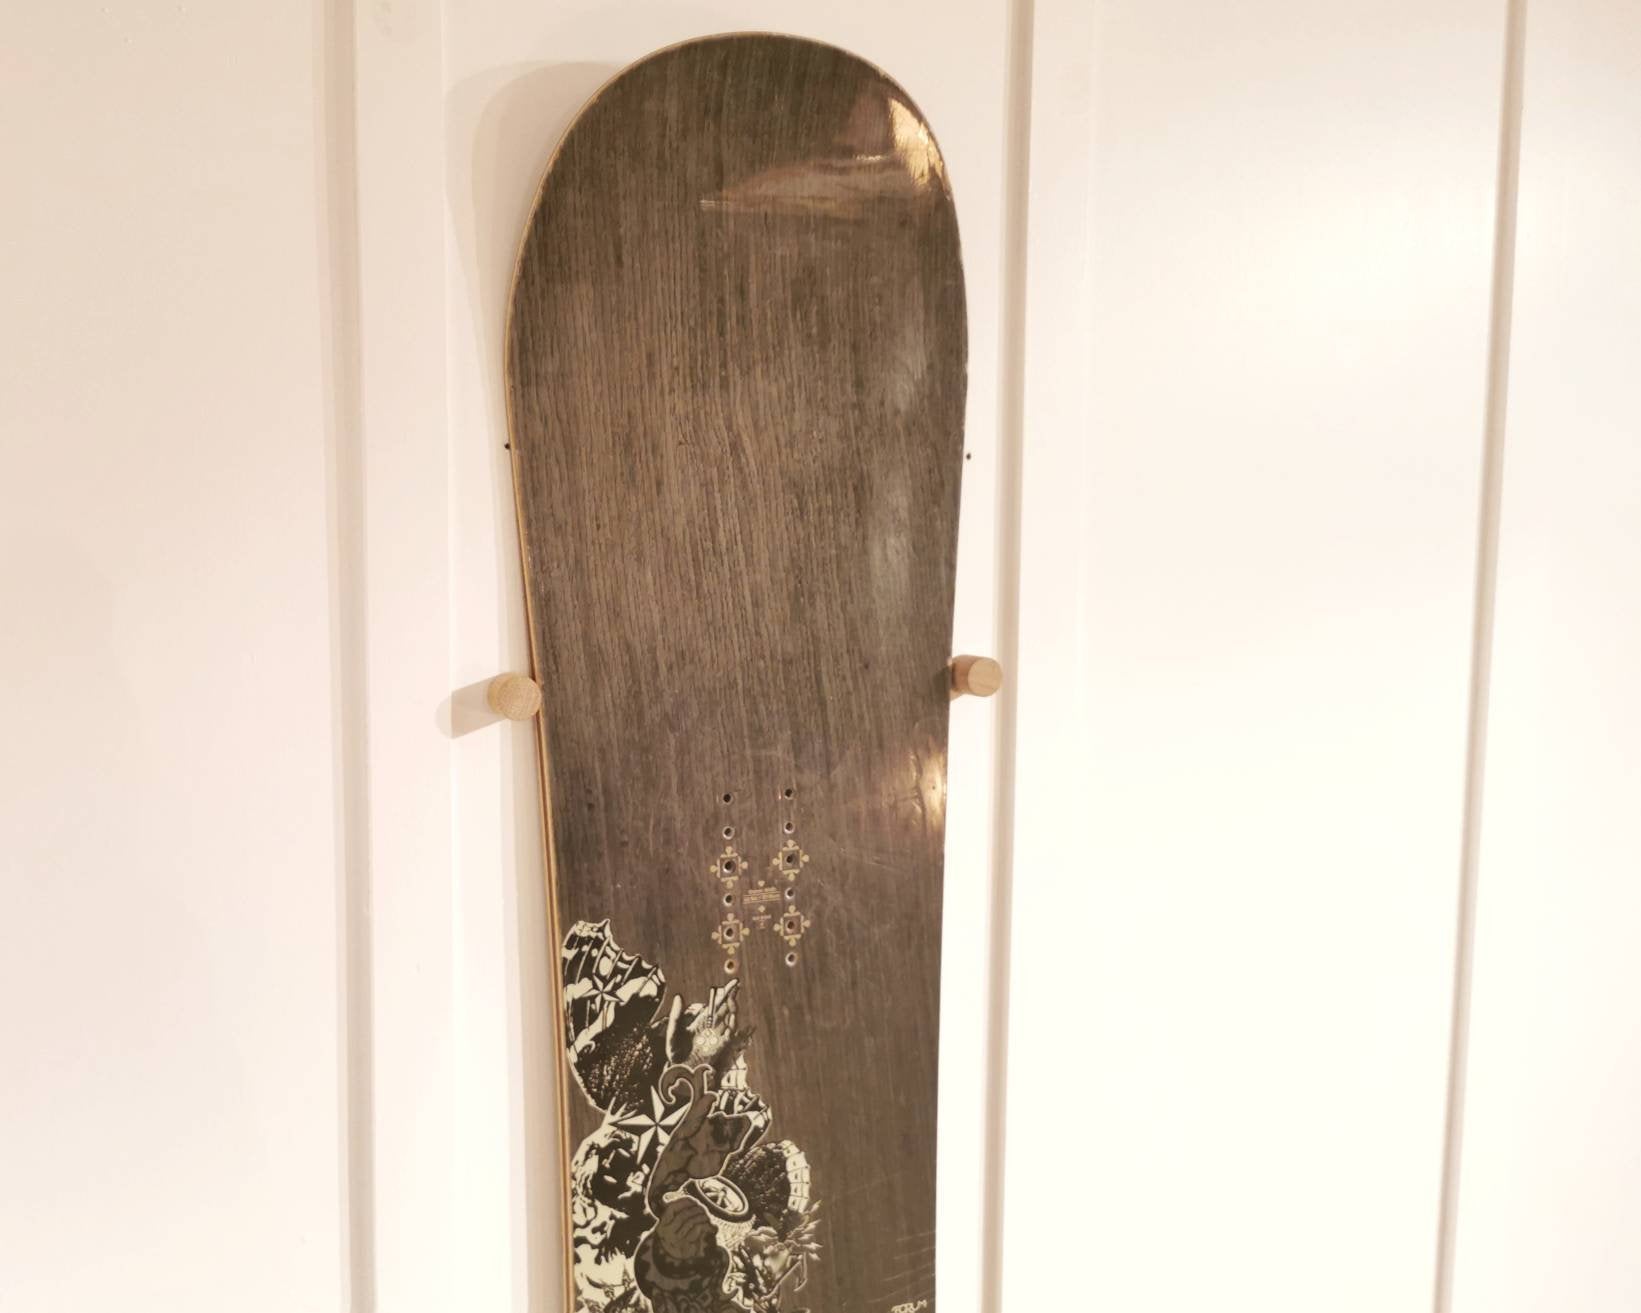 Floating Snowboard Holder Wall Mount / minimalist simple guitar rack